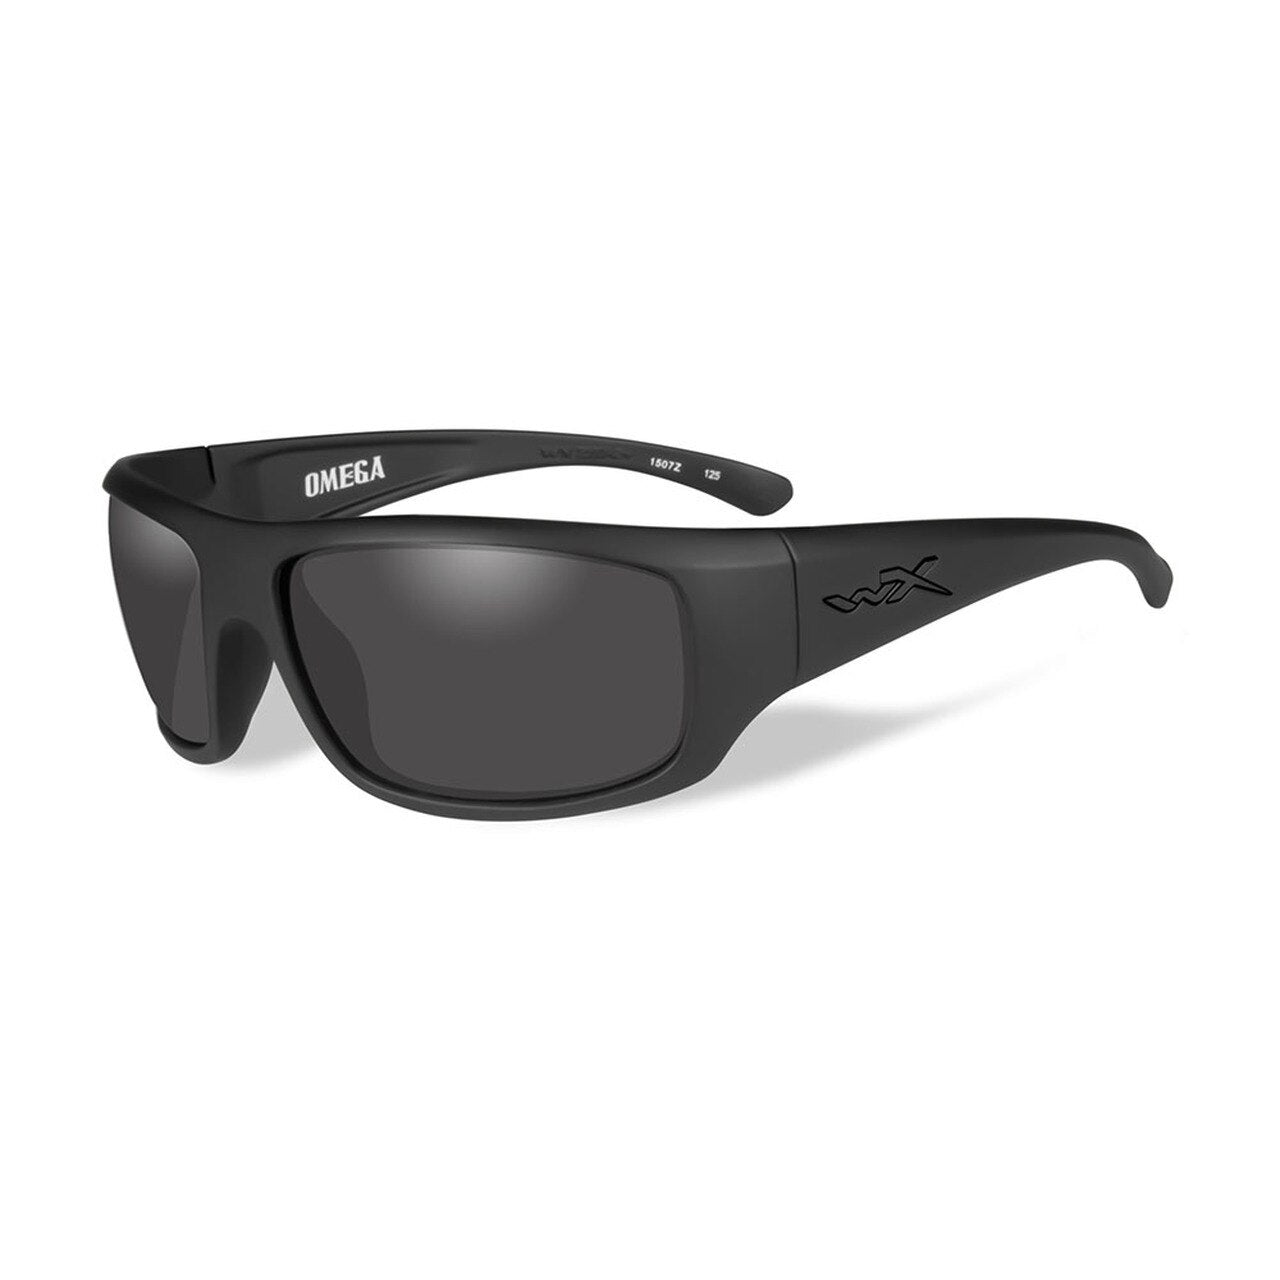 Wiley X Omega Sunglasses Smoke Grey Lens Matte Black Frame Tactical Distributors Ltd New Zealand